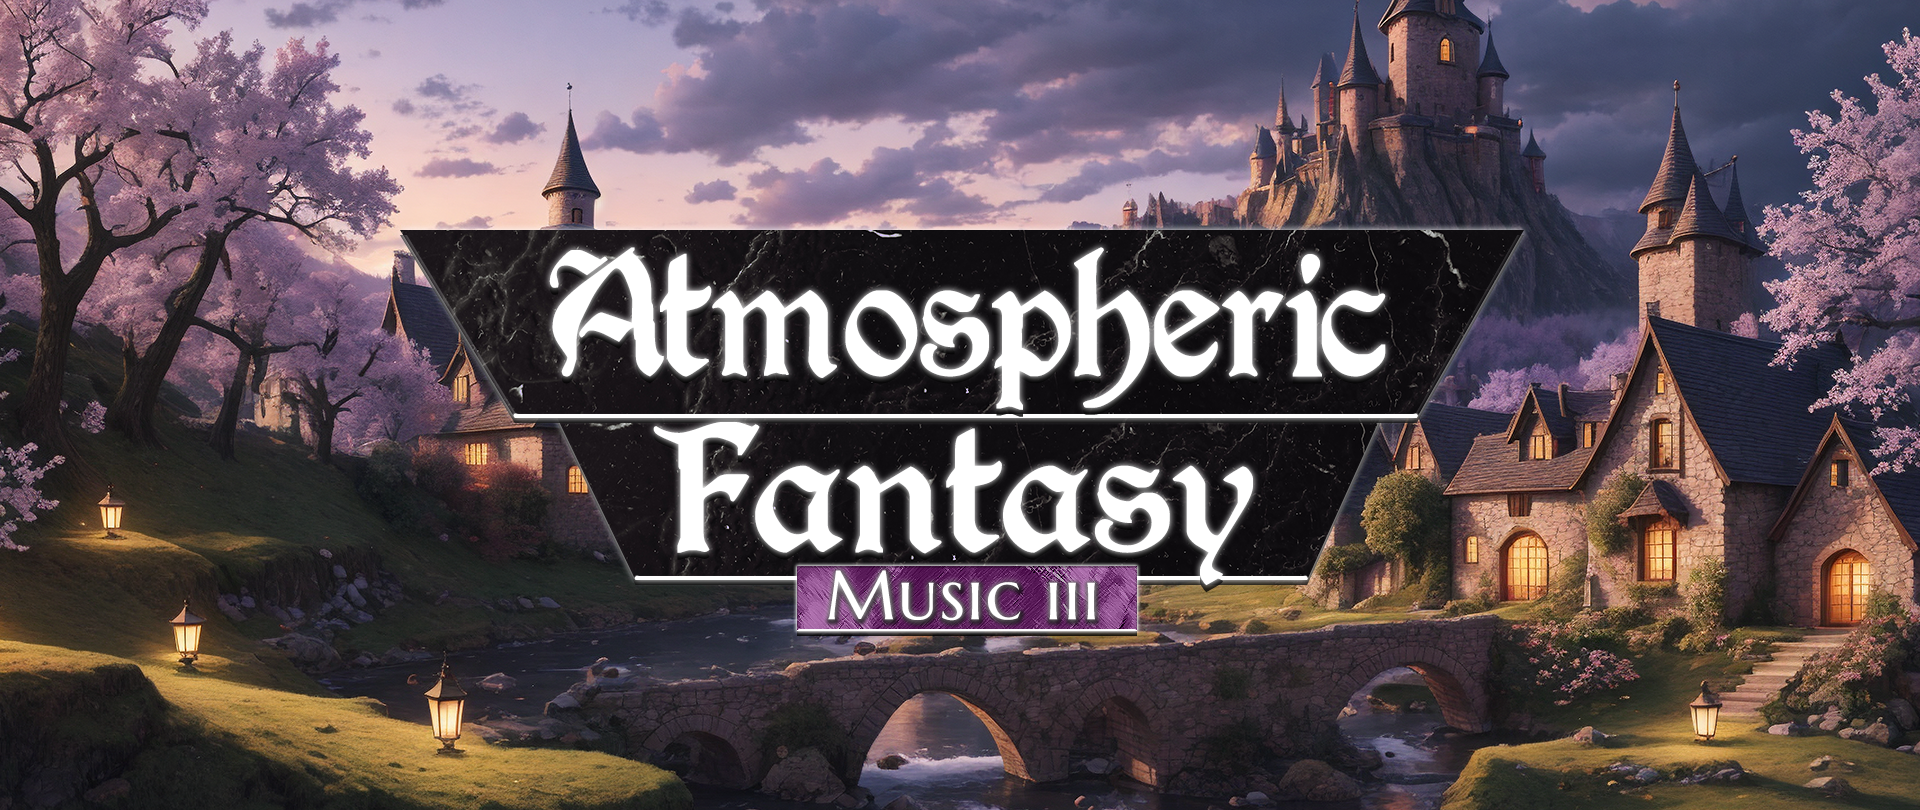 Atmospheric Fantasy Music 3